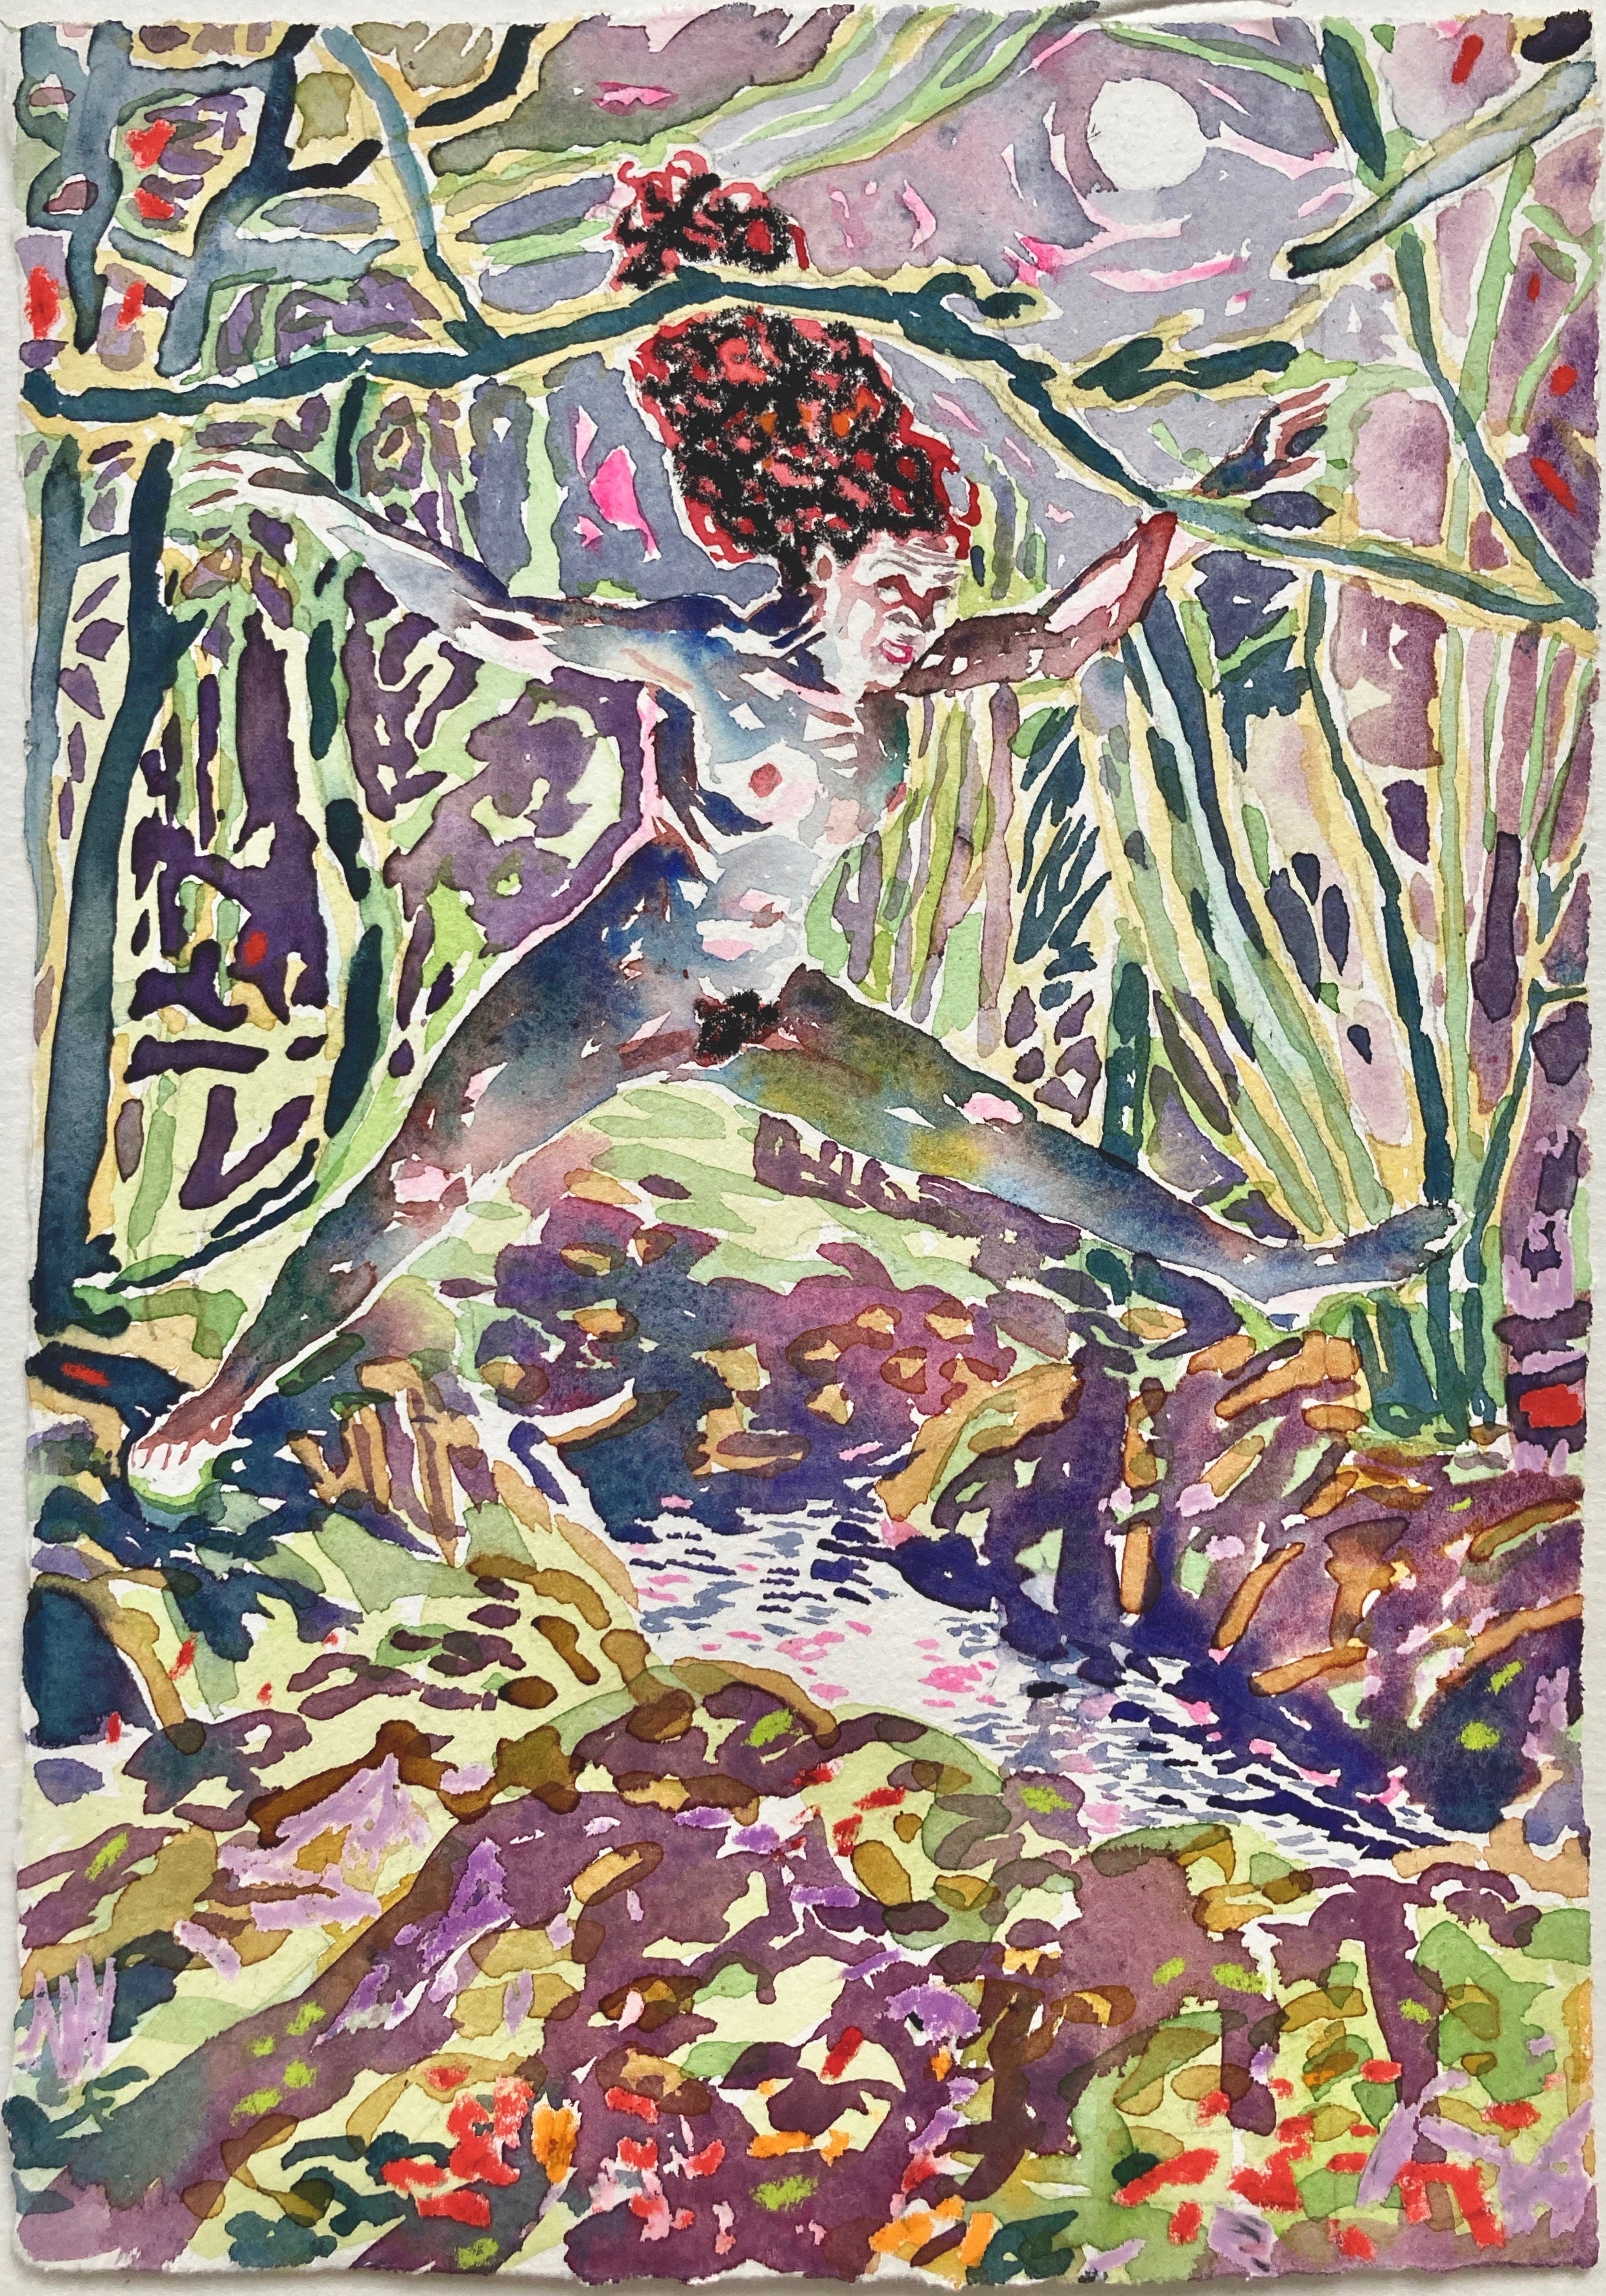 Dominic Shepherd 'Full Moon Fever', 2021 Watercolour, oil and soft pastel on paper 30x21cm